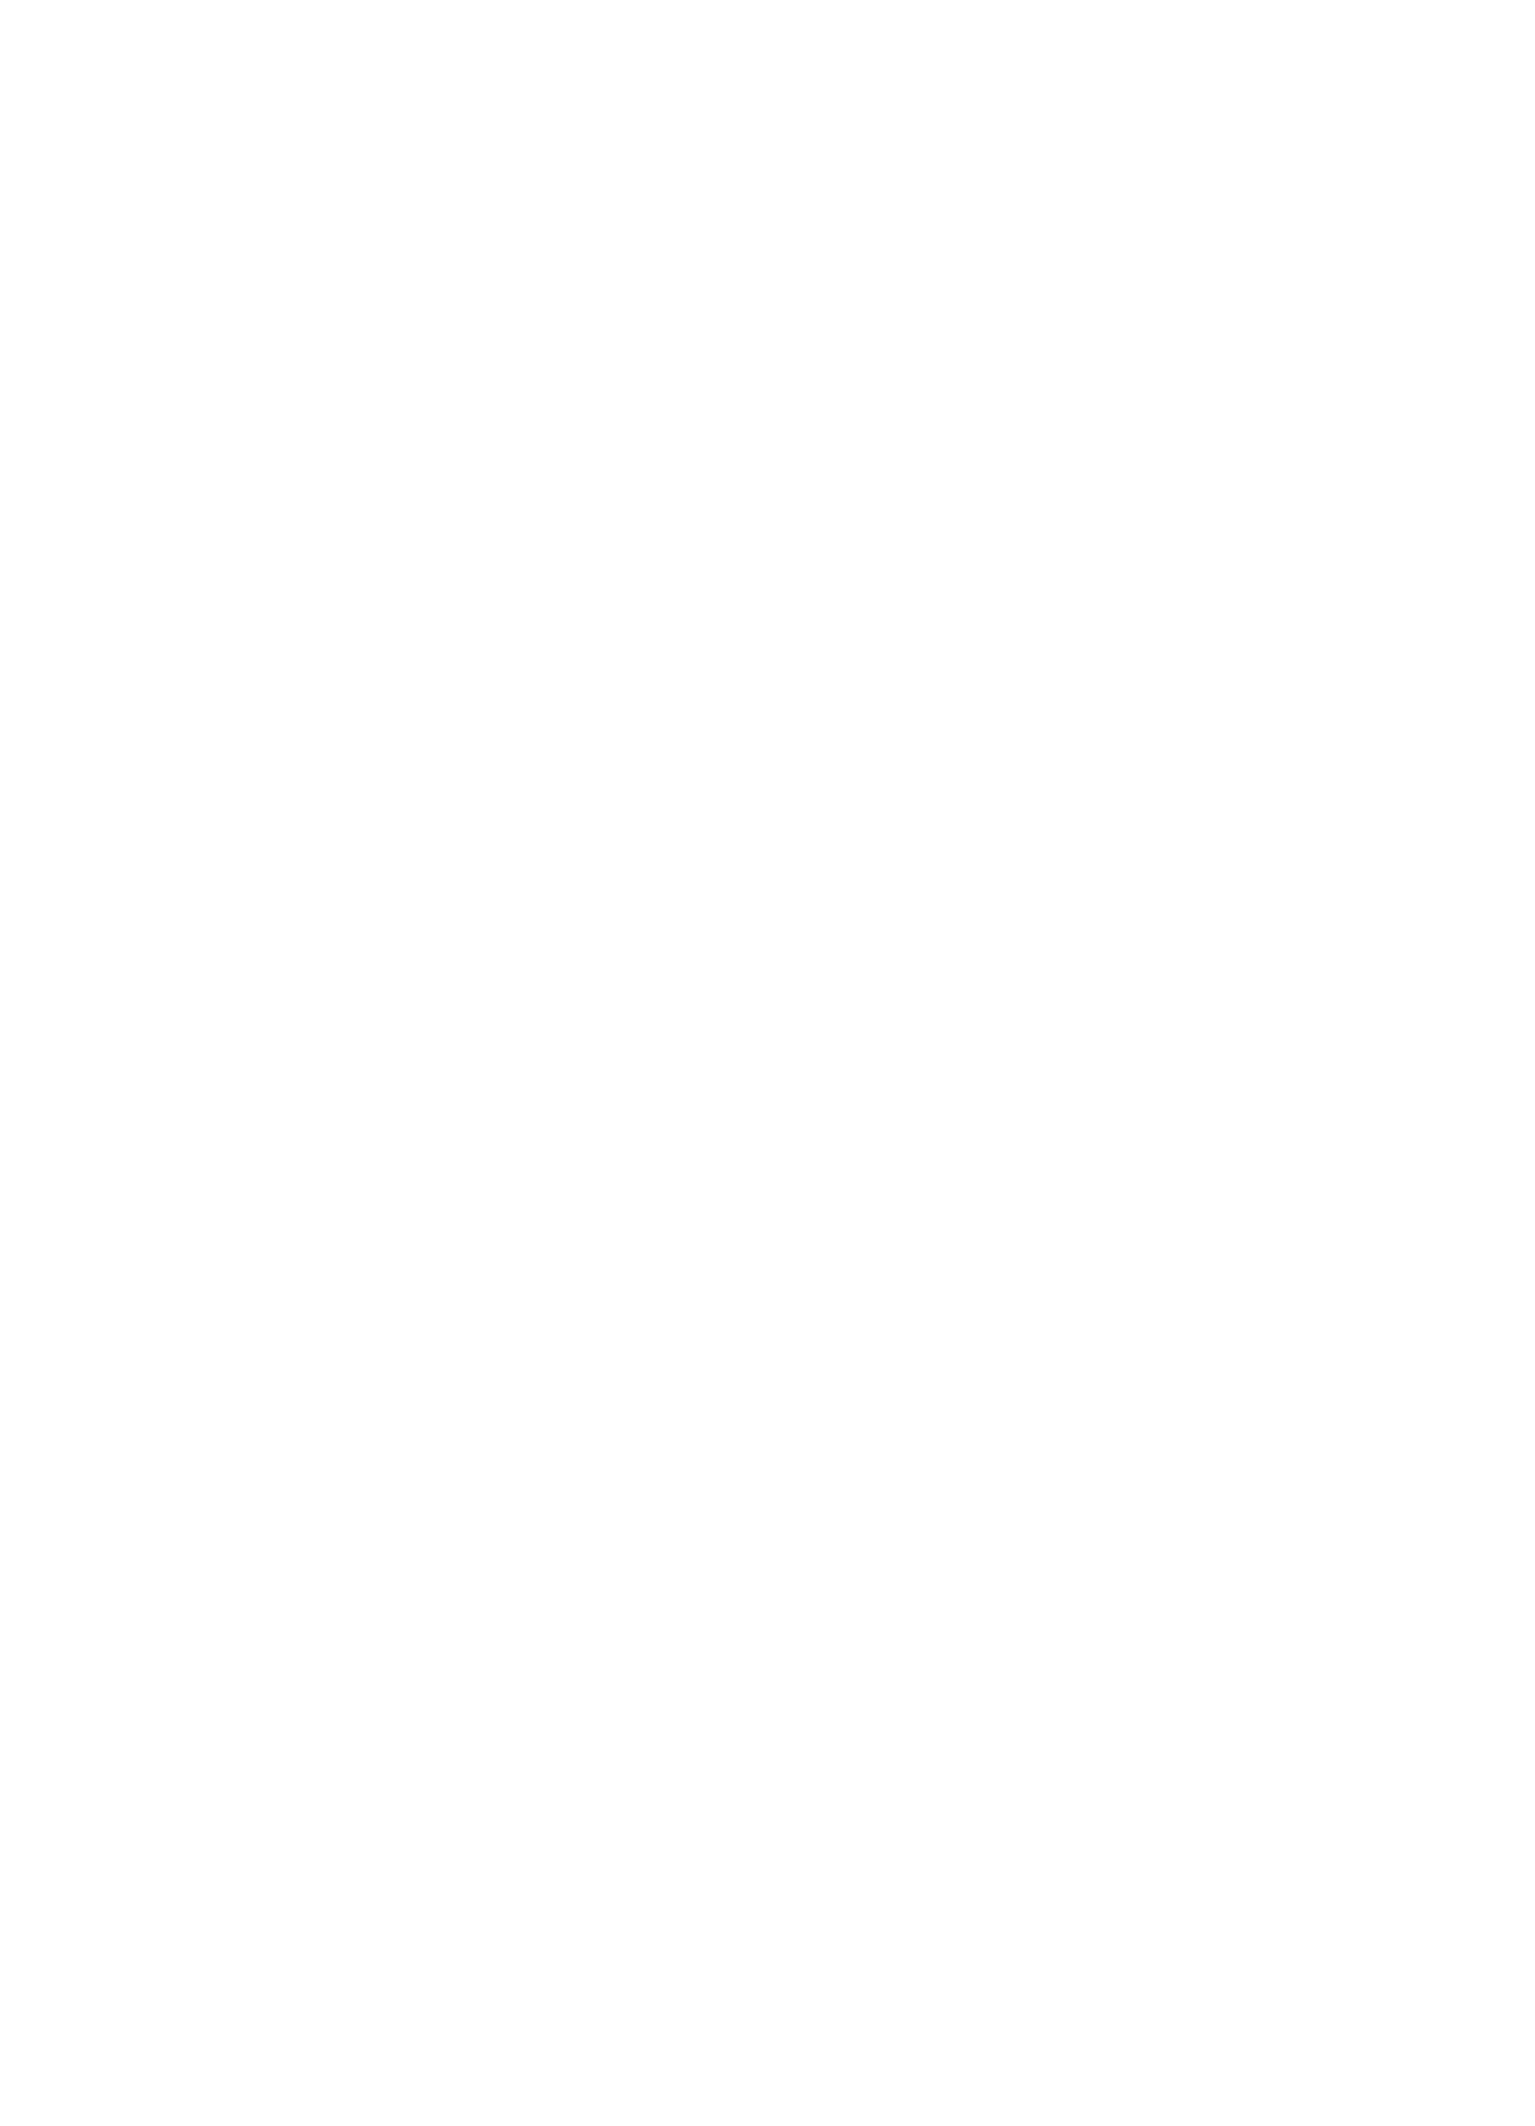 Newcastle Medicals Badminton Club